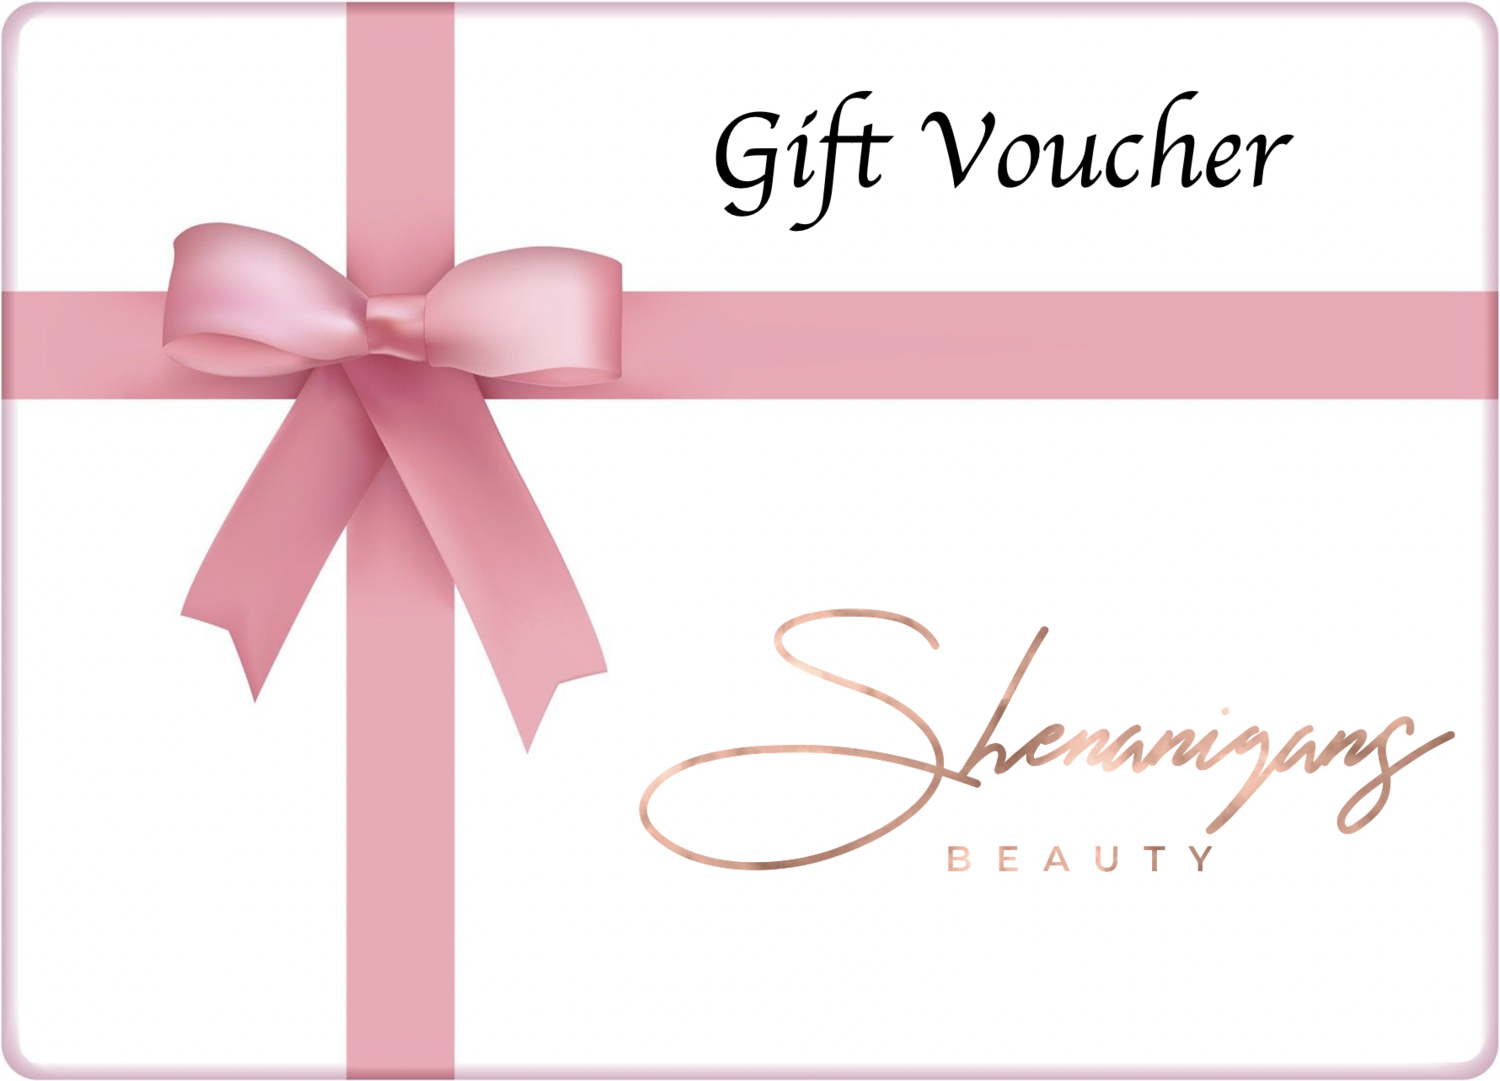 Shenanigans Beauty - Gift Voucher